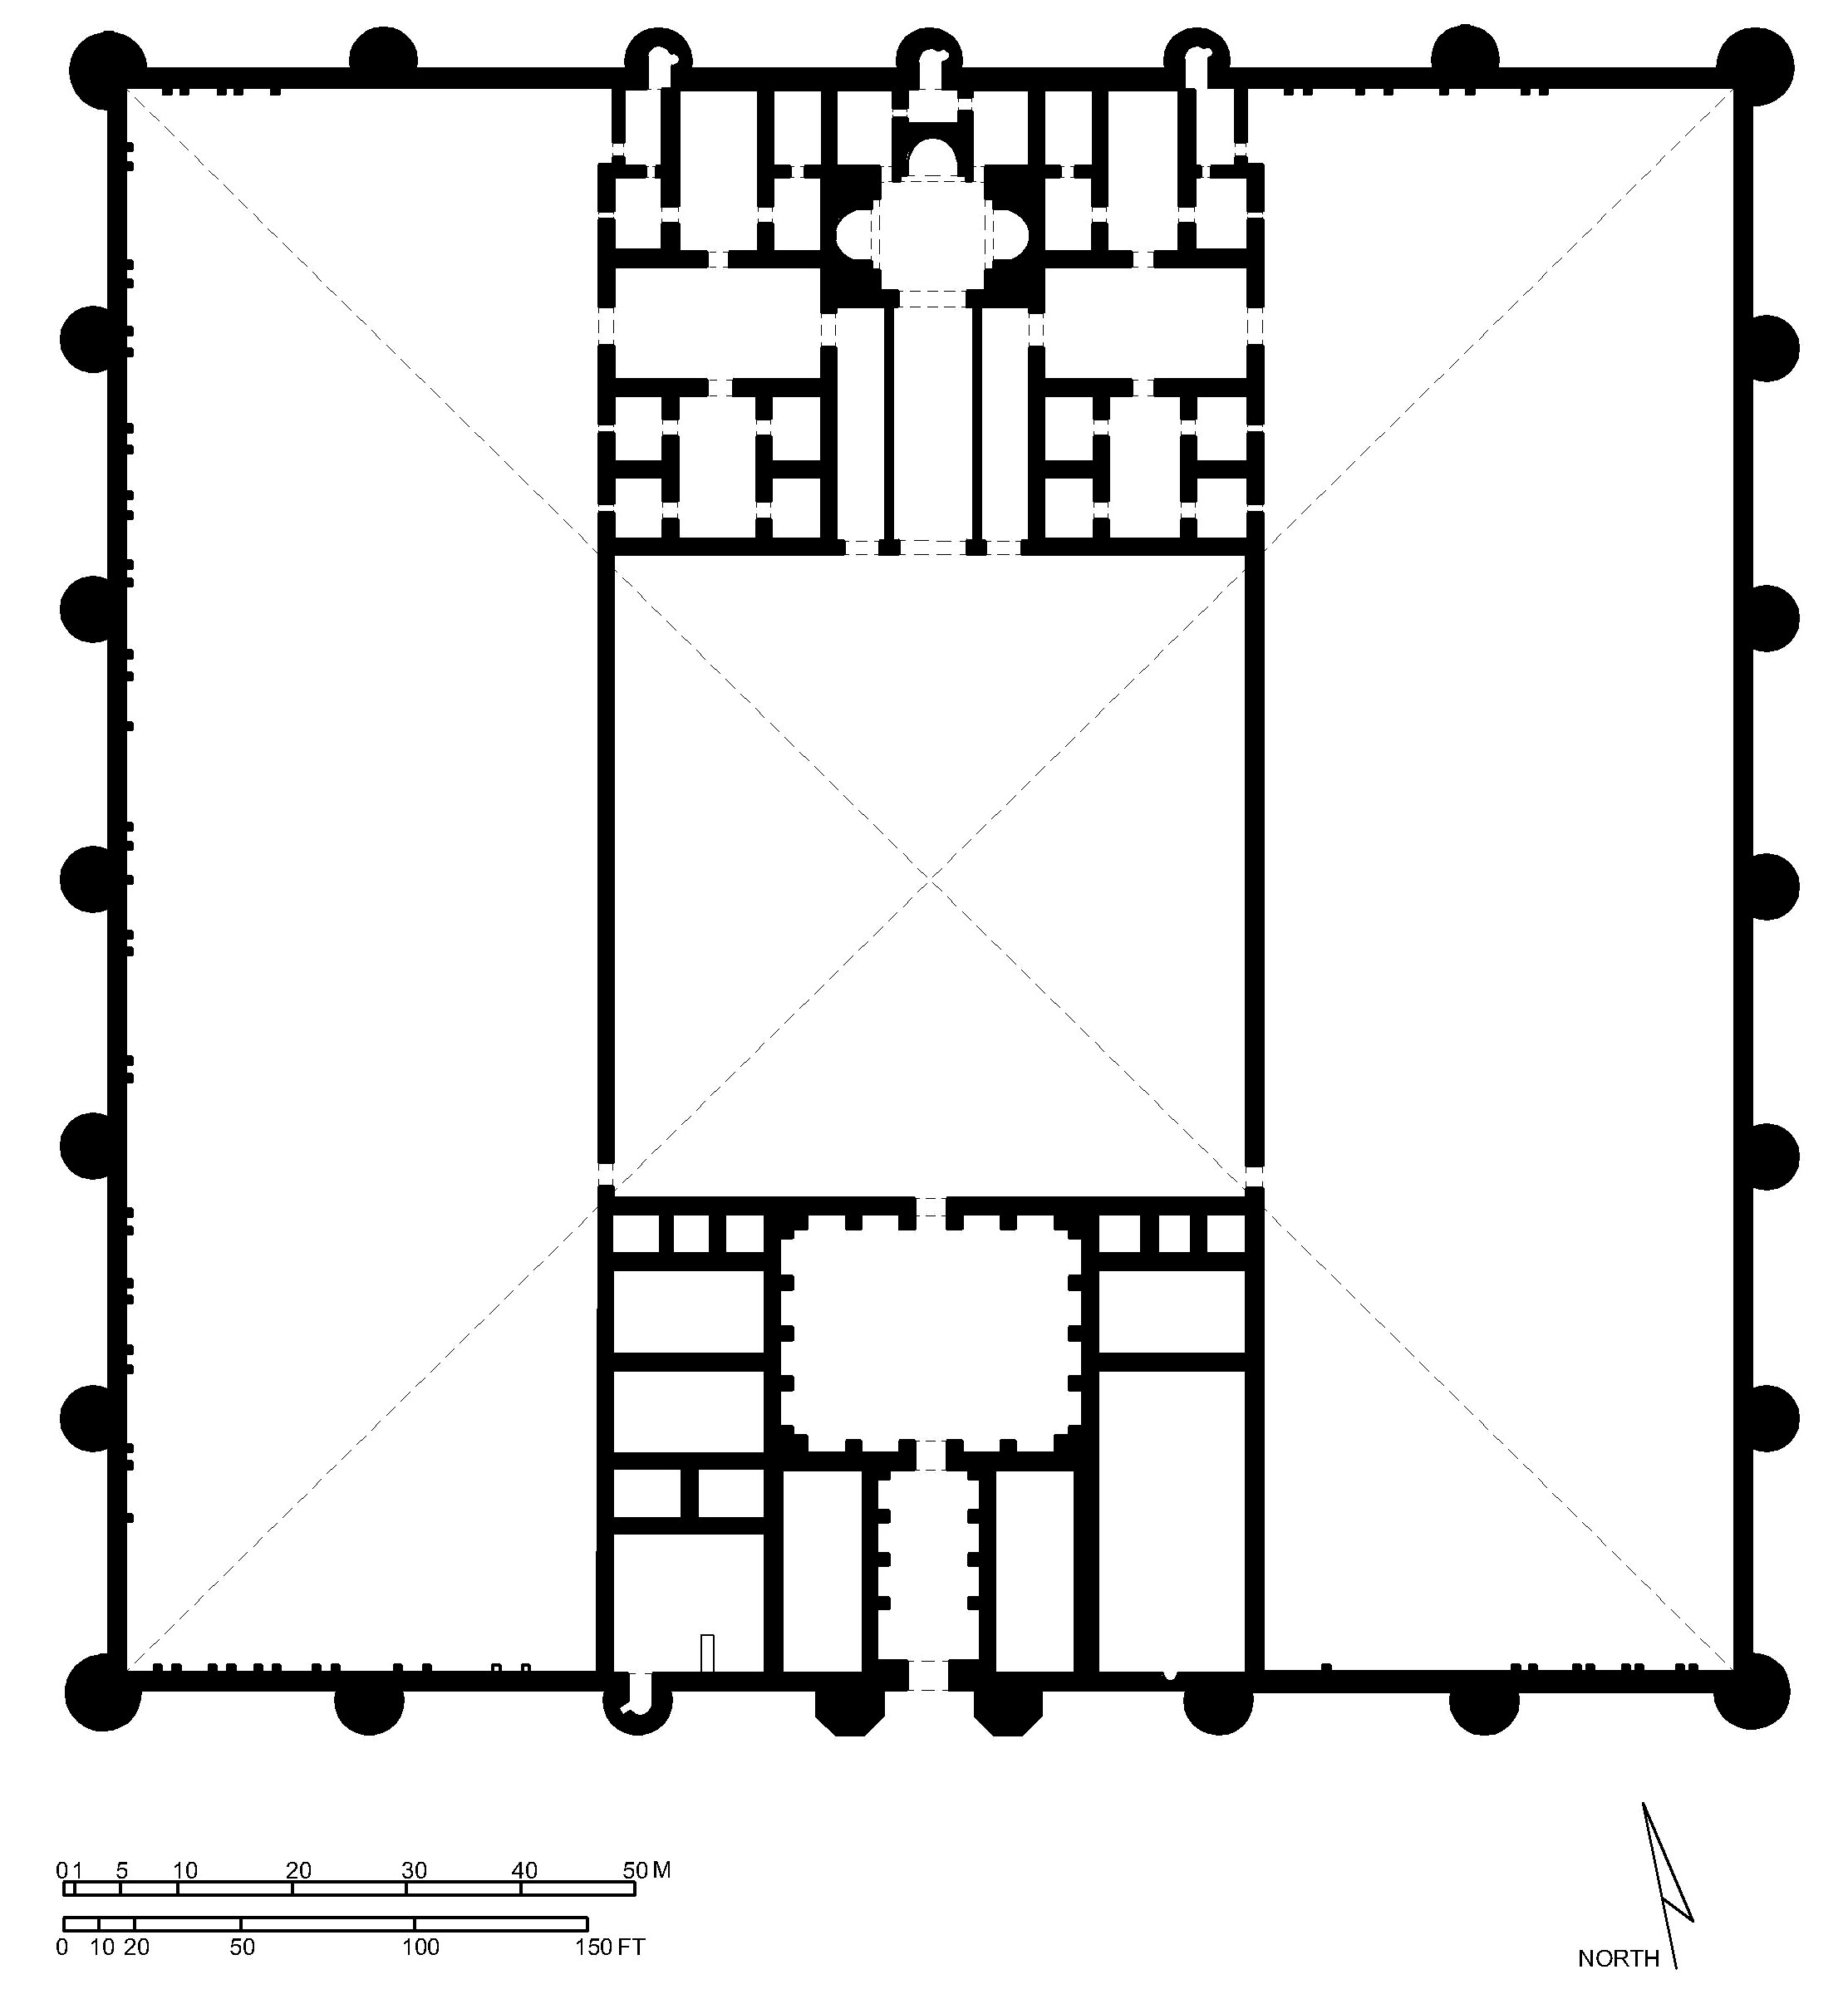 Floor plan of palace